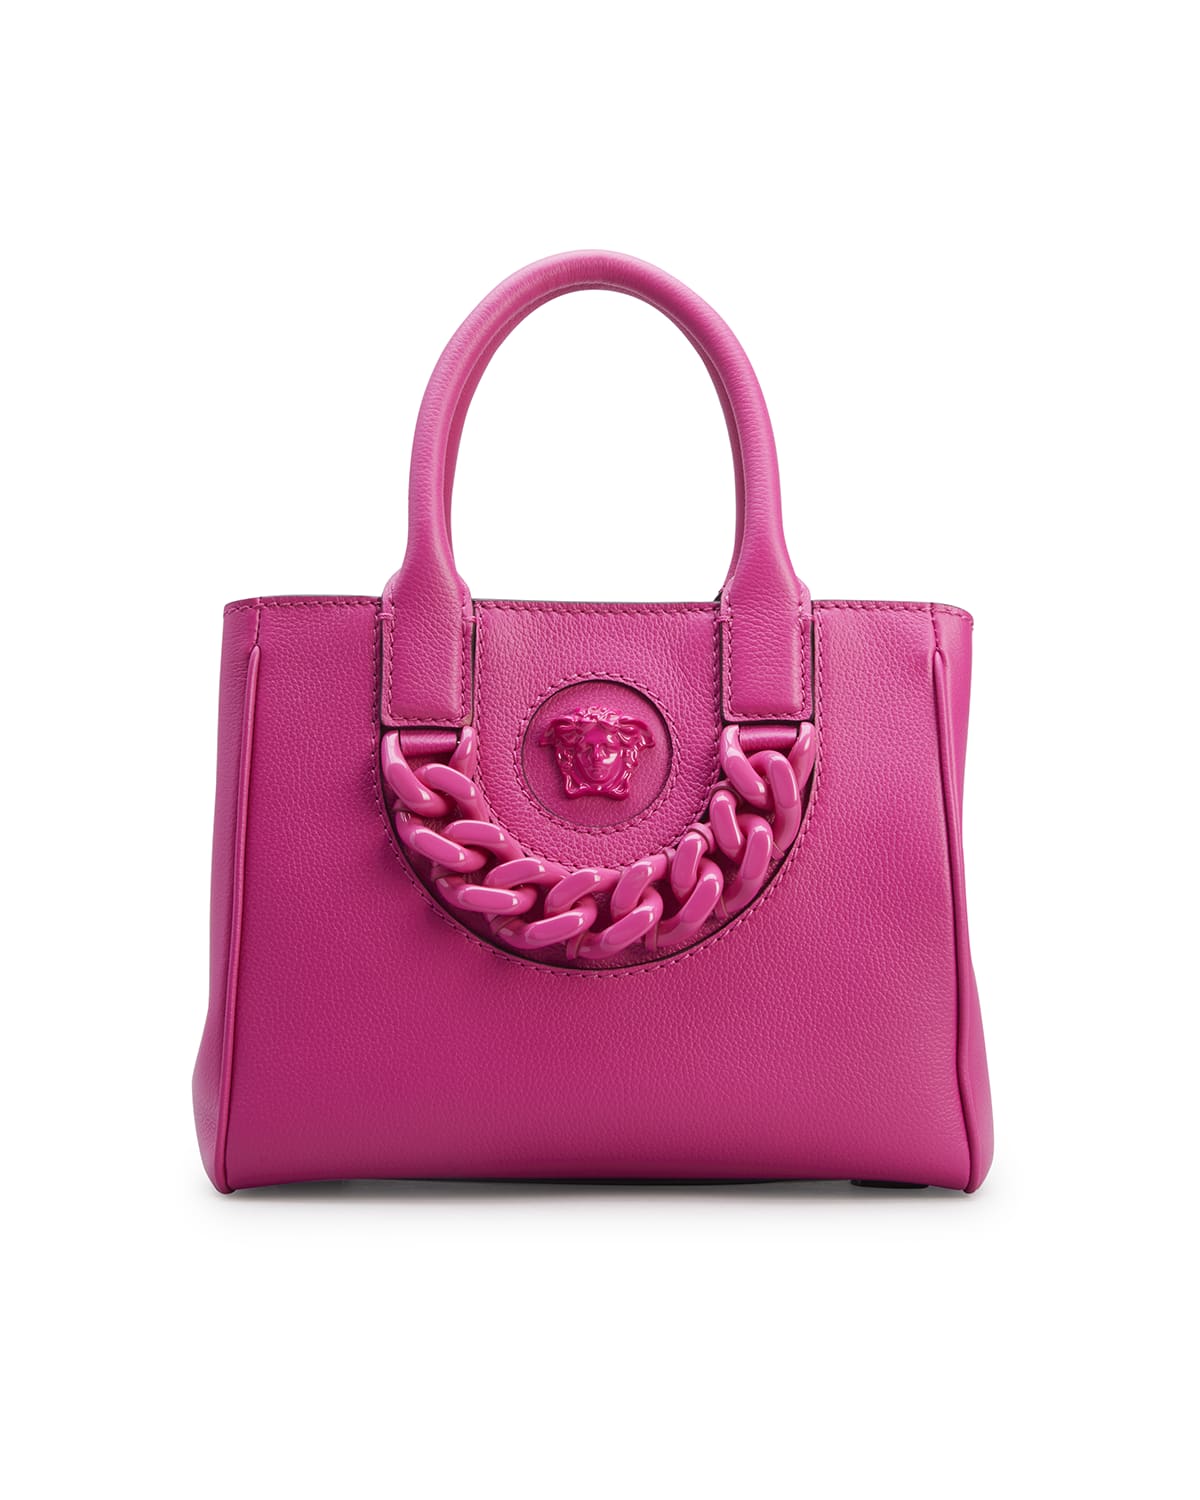 Versace La Medusa Small Chain Tote Bag In Hot Pink | ModeSens